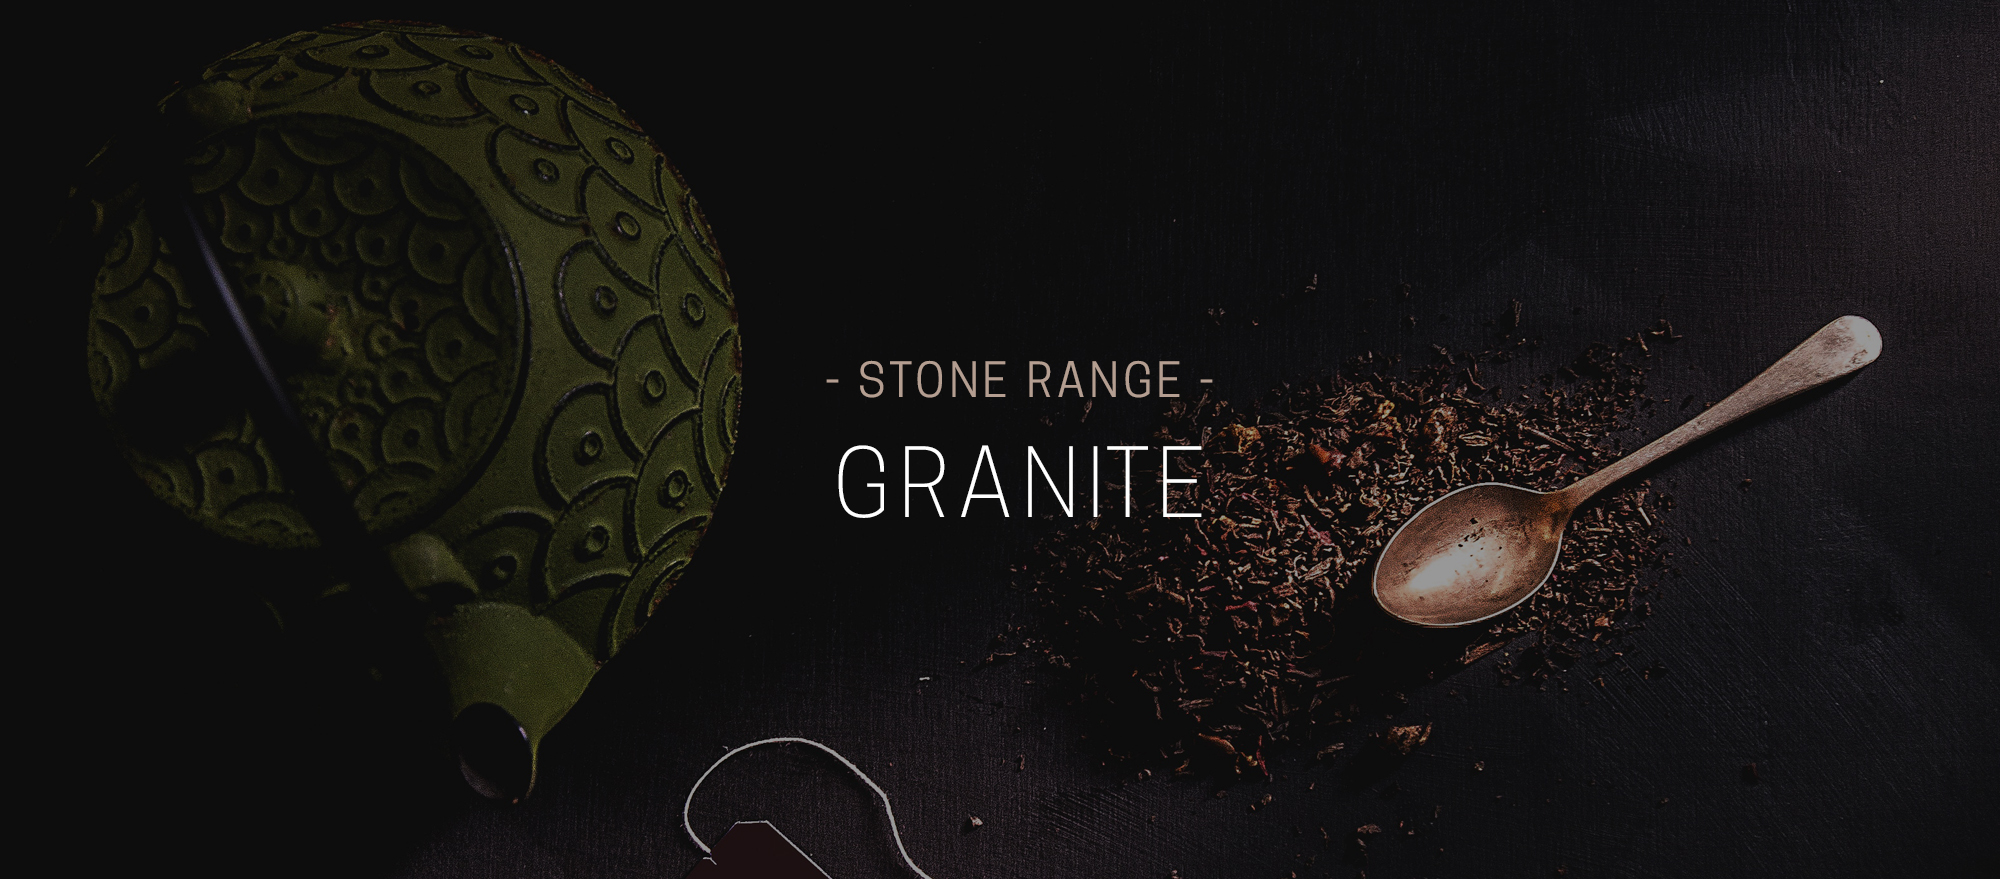 &lt;strong&gt;Bristol Marble &amp; Granite＿&lt;/strong&gt;&lt;p&gt;Experts in stone&lt;br&gt;&amp;nbsp&lt;/p&gt;